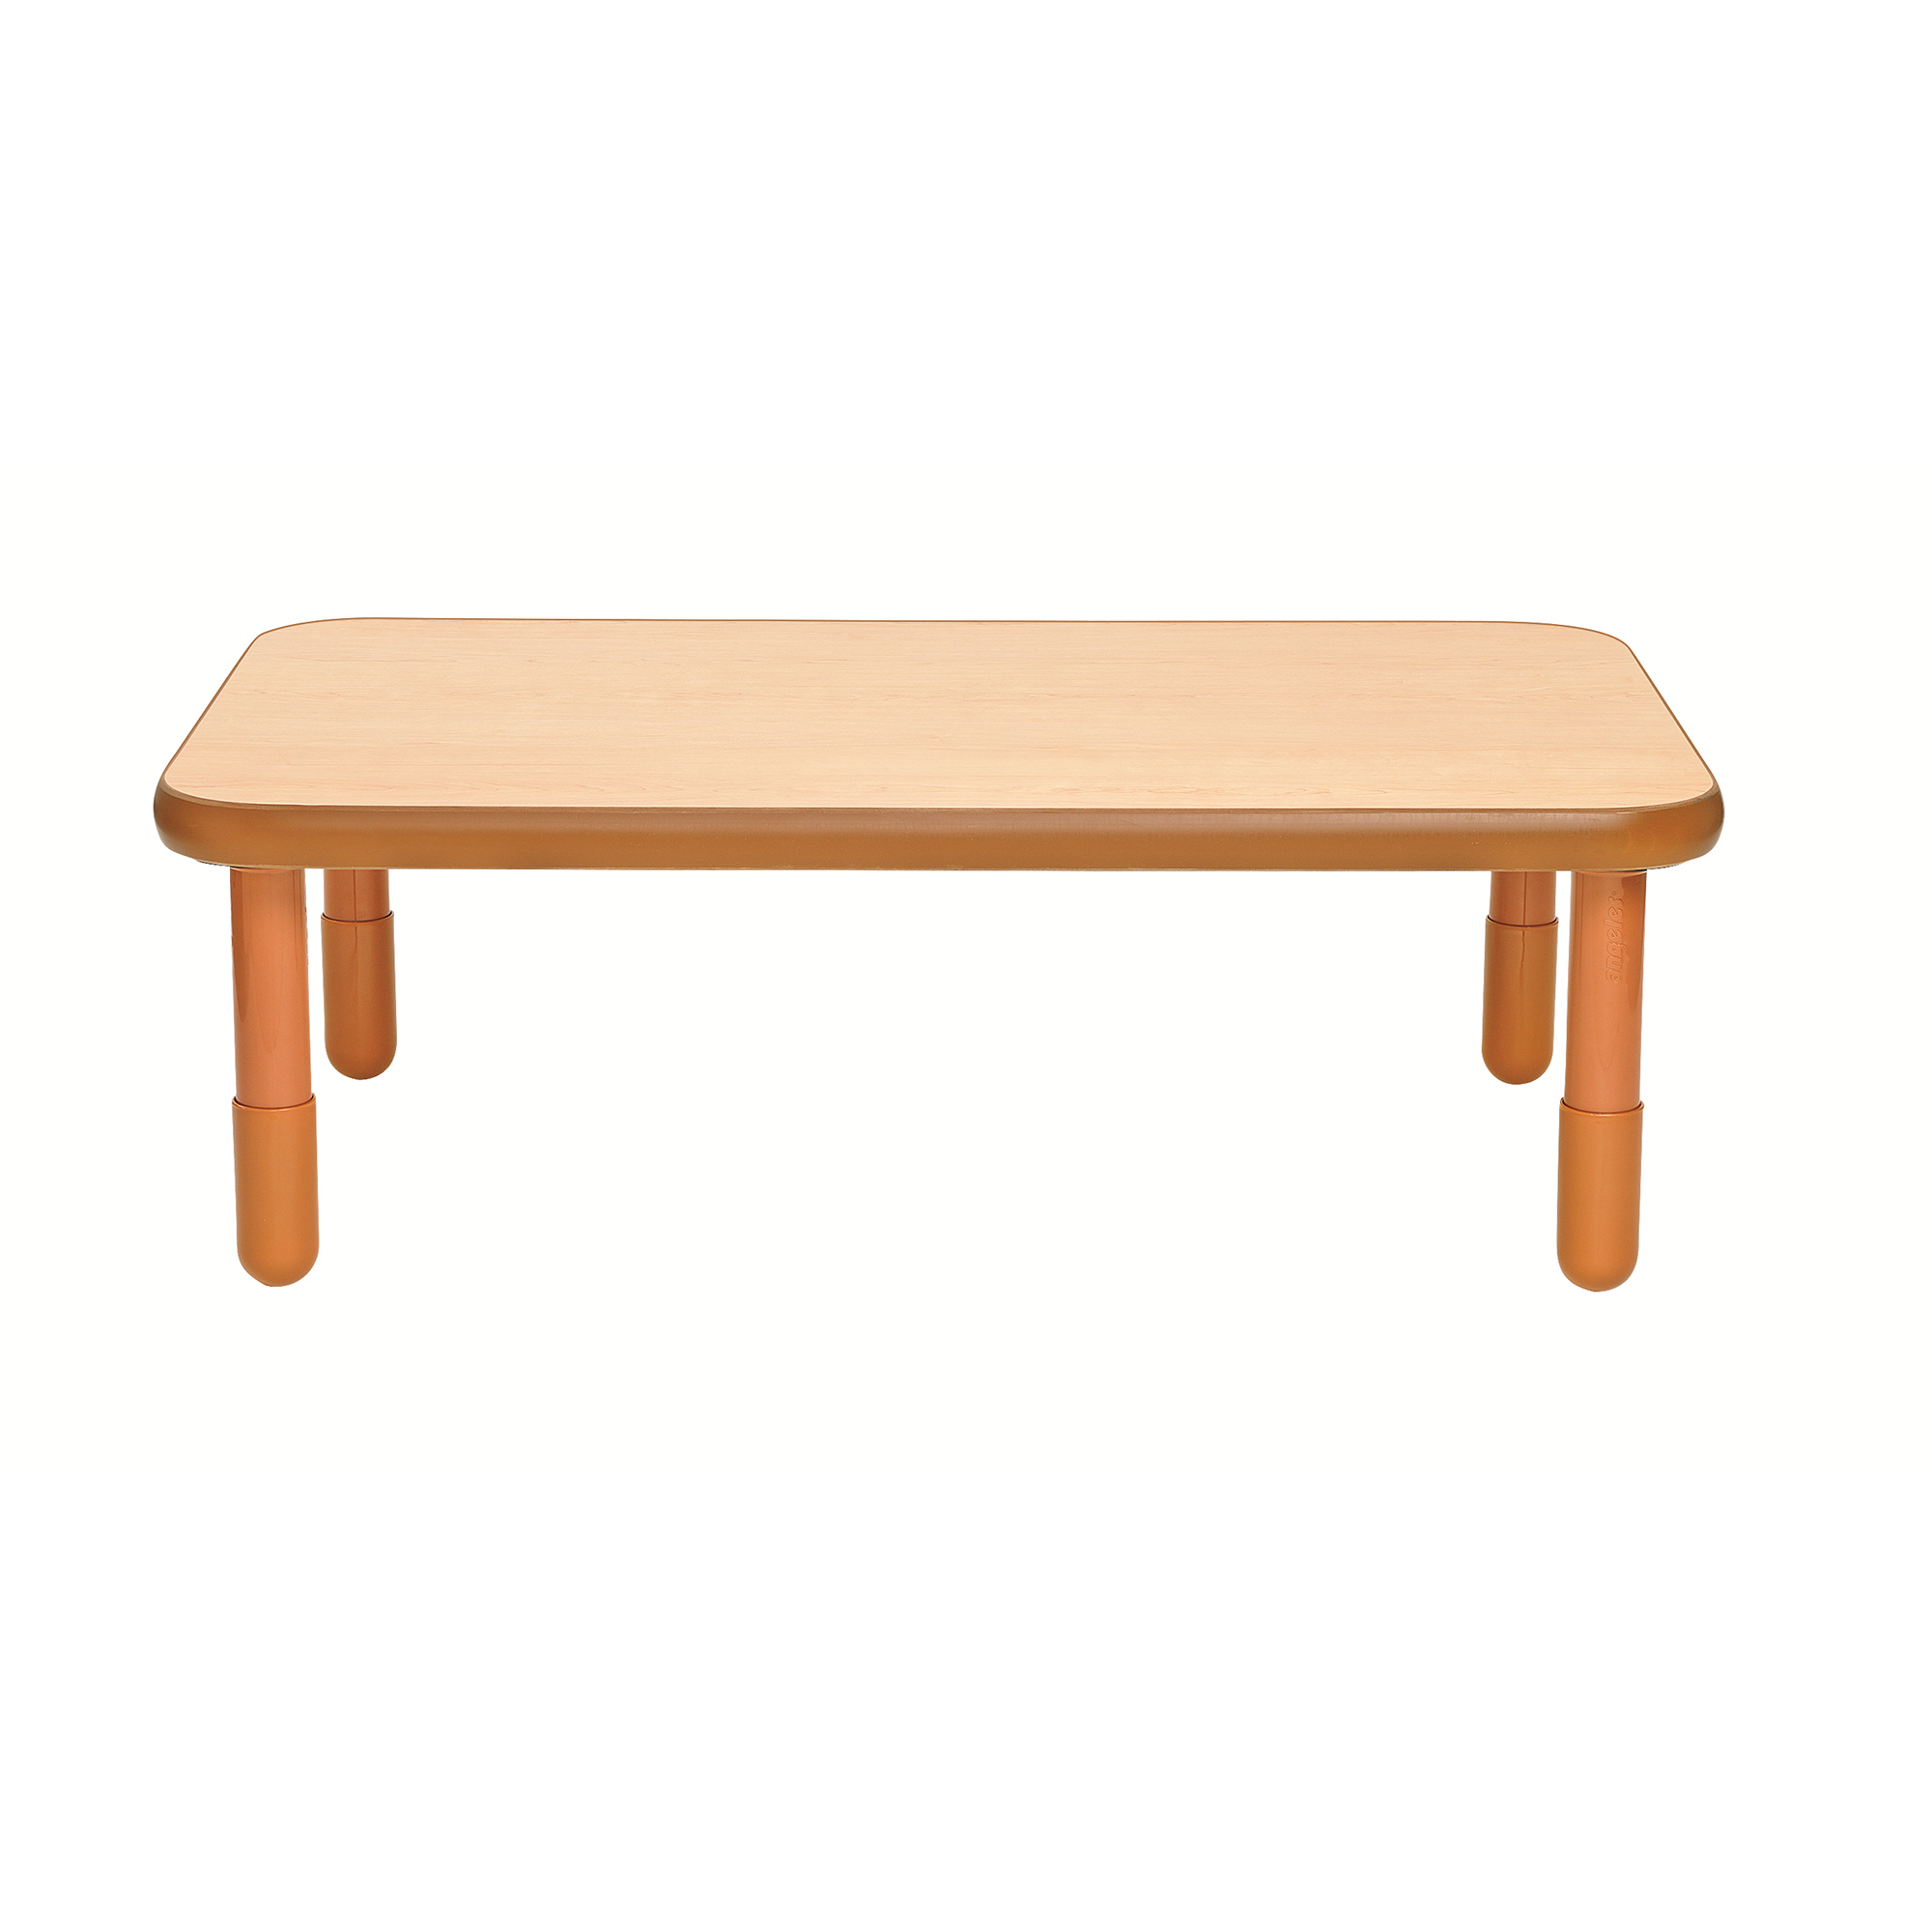 BaseLine® 122 cm  x 76 cm  Rectangular Table - Natural Wood with 40,5 cm  Legs